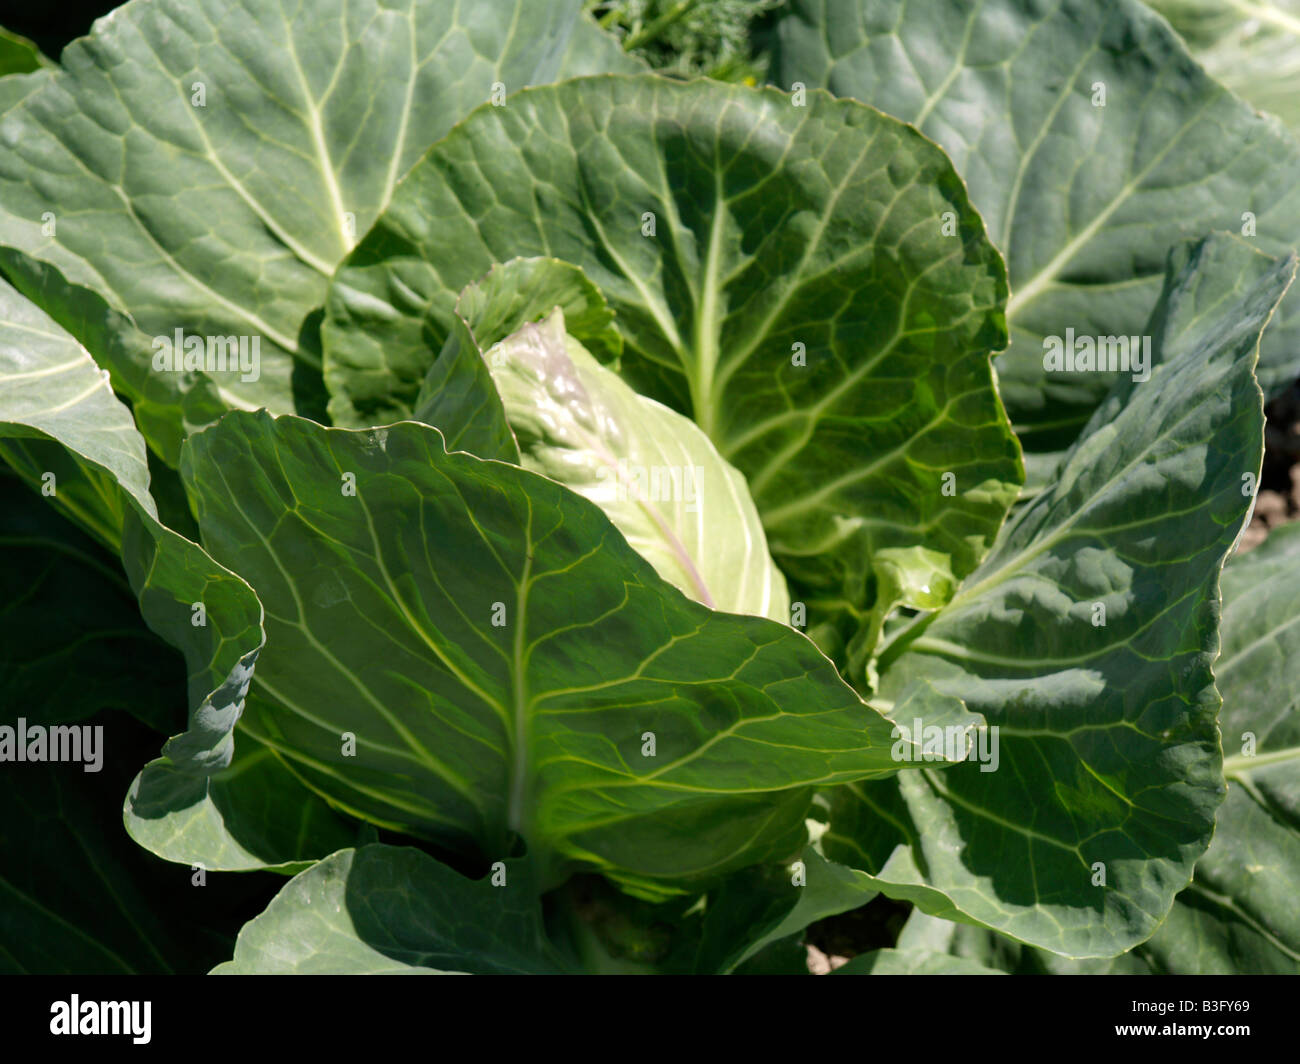 Weisskohl, Spitzkohl, Wild Cabbage (Brassica oleracea) Stock Photo